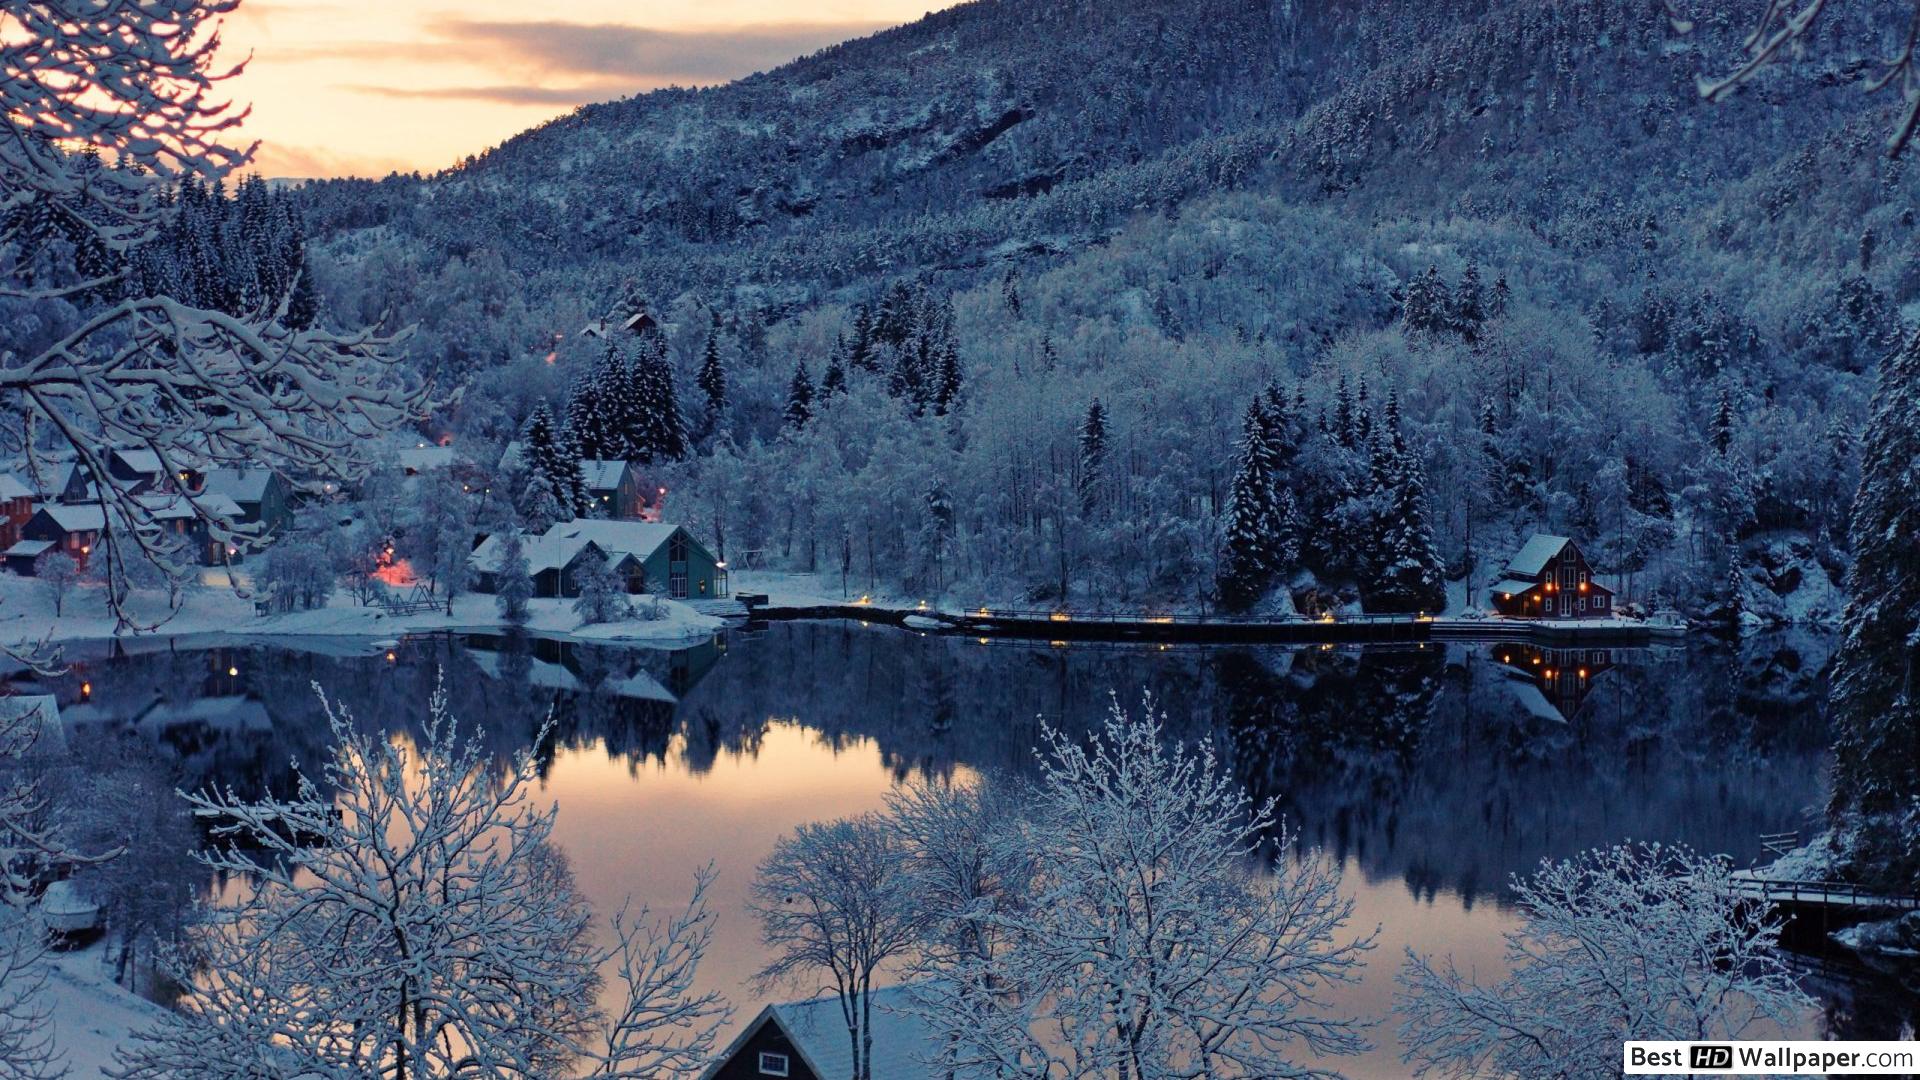 Sunset at winter village in winter HD wallpaper download